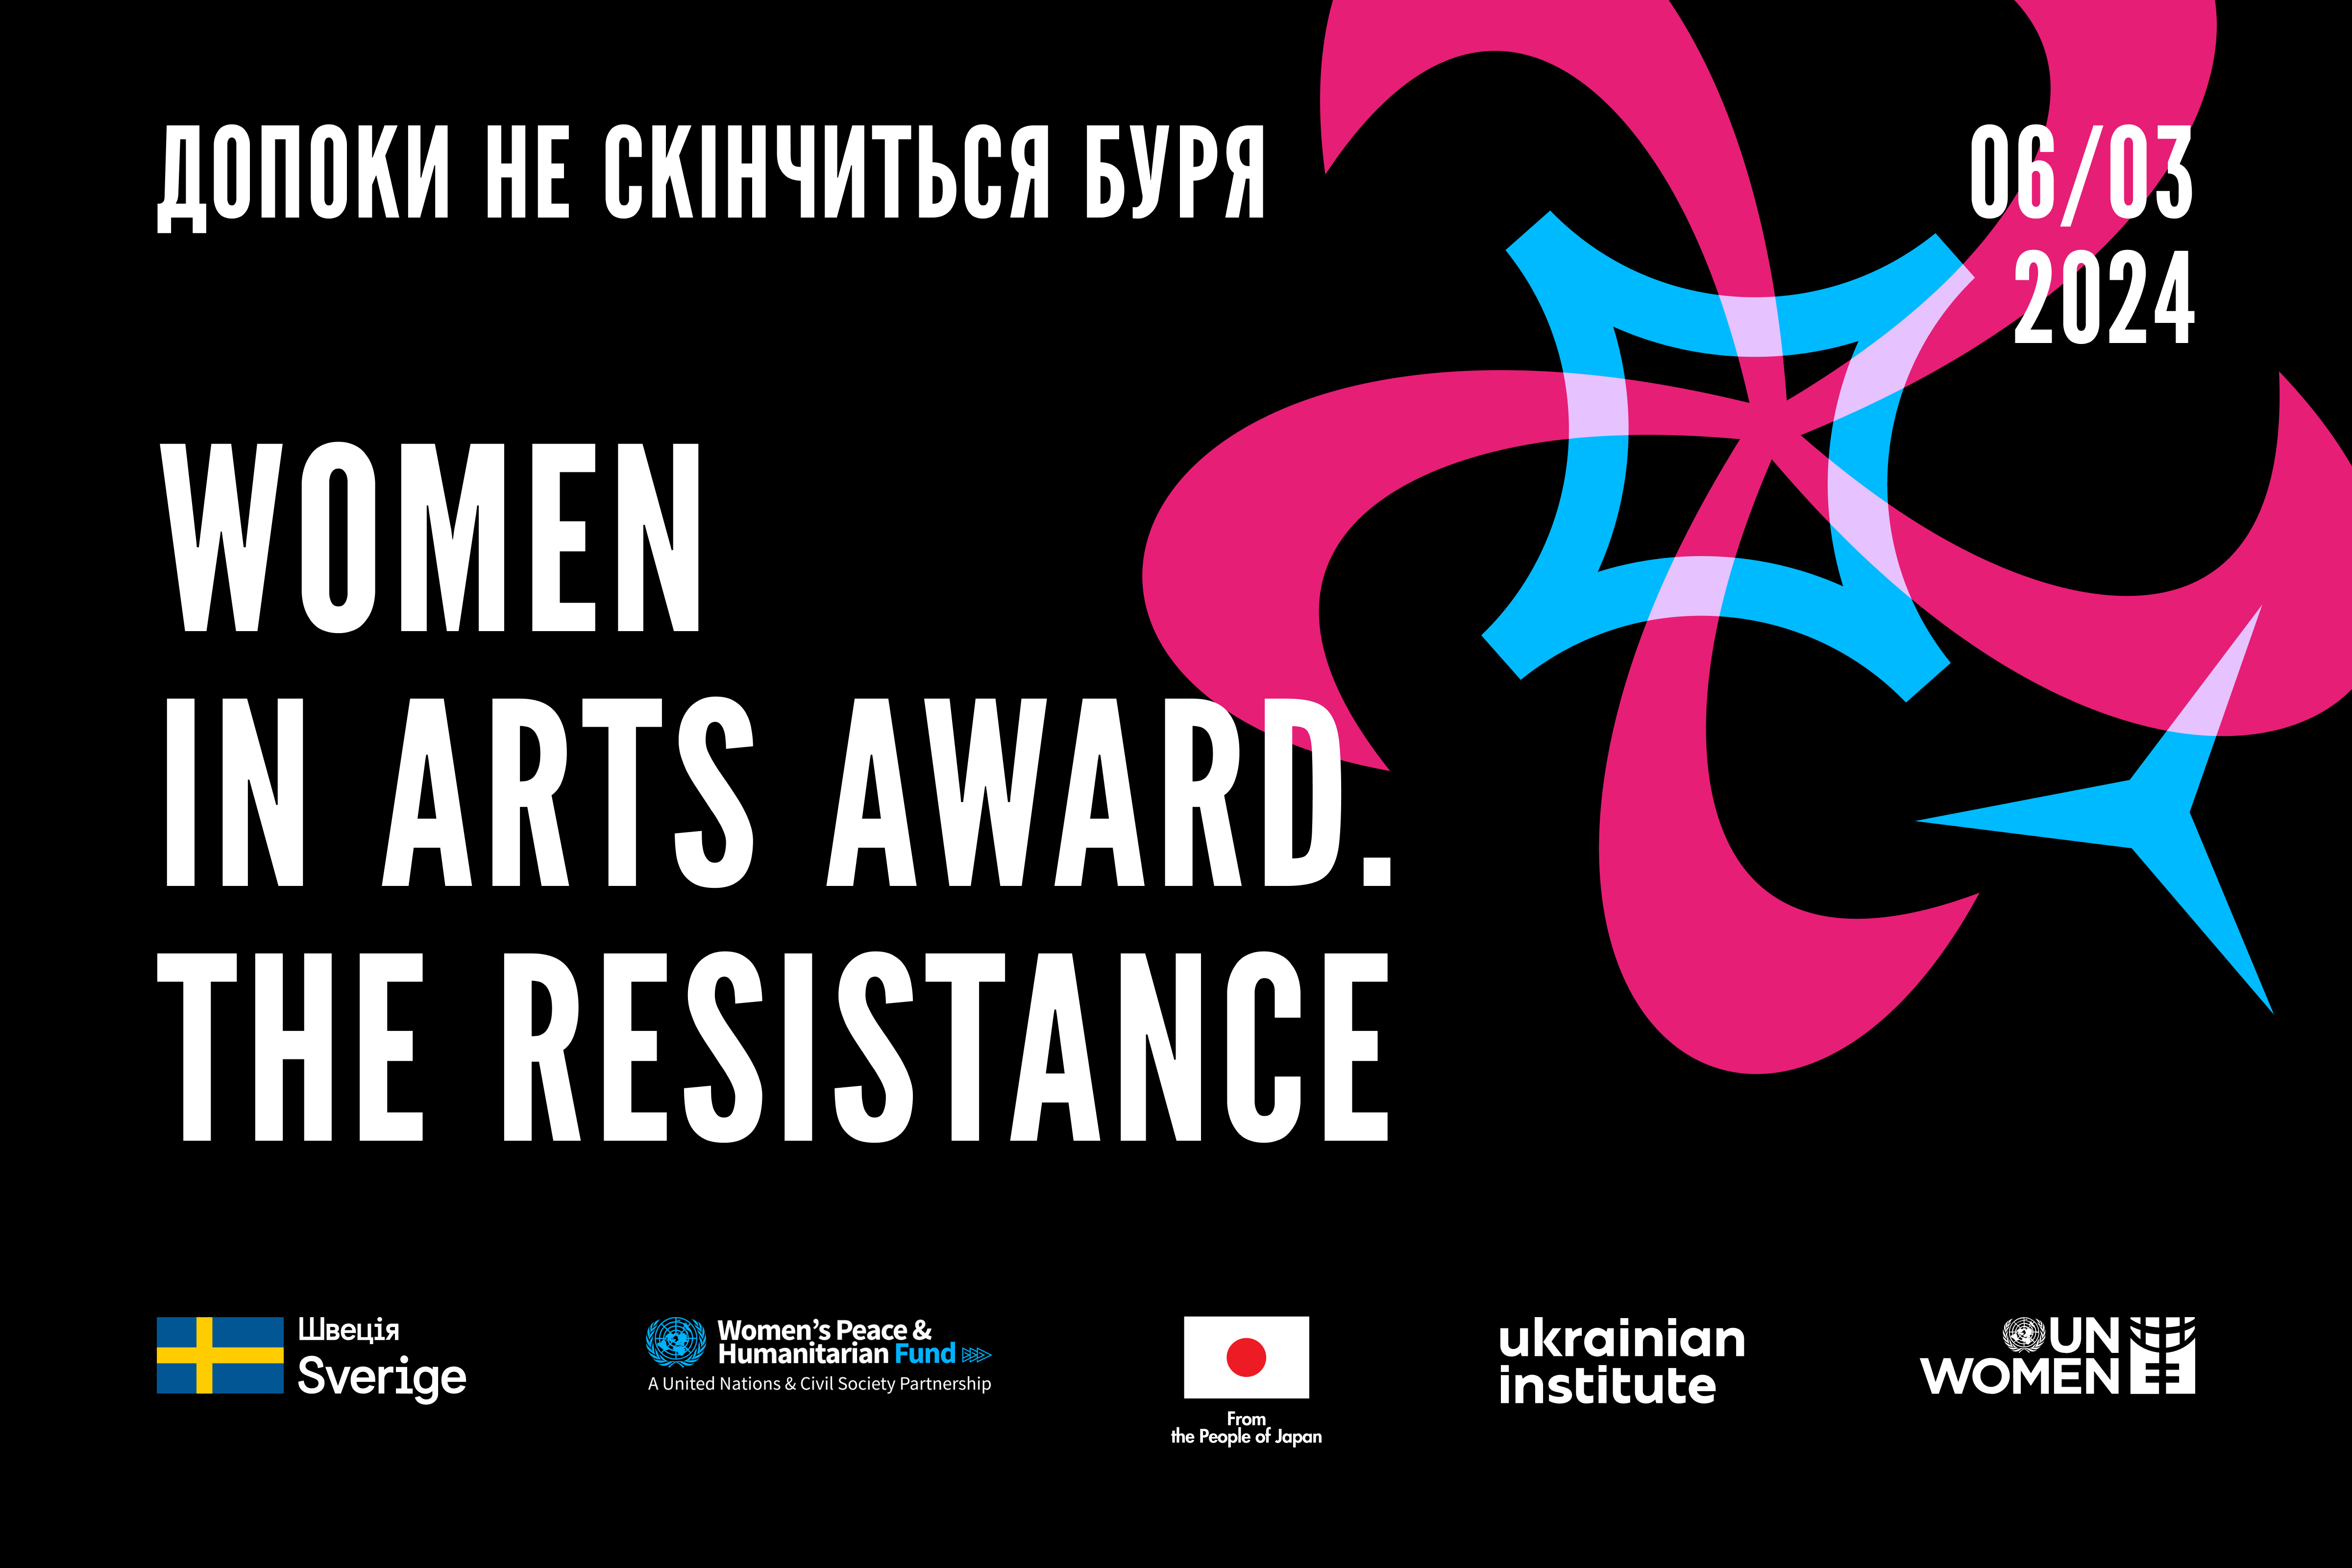 WOMEN IN ARTS AWARD. THE RESISTANCE